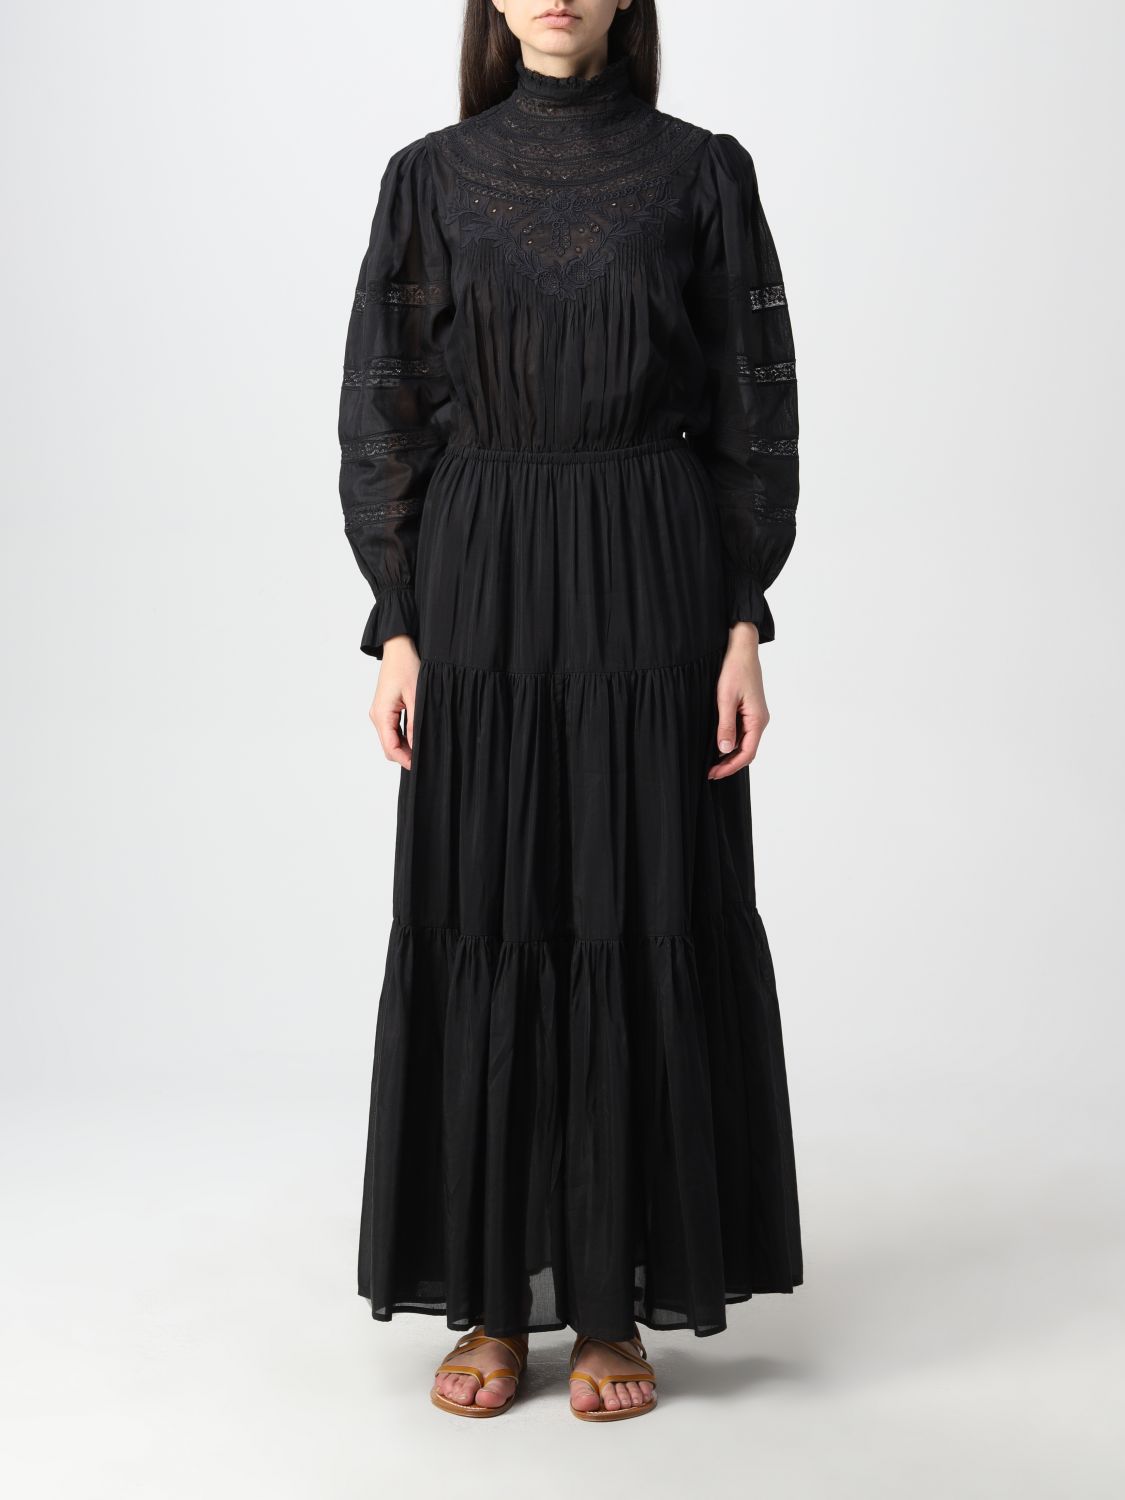 ISABEL MARANT: dress for woman - Black | Isabel Marant dress RO212422P034I online on